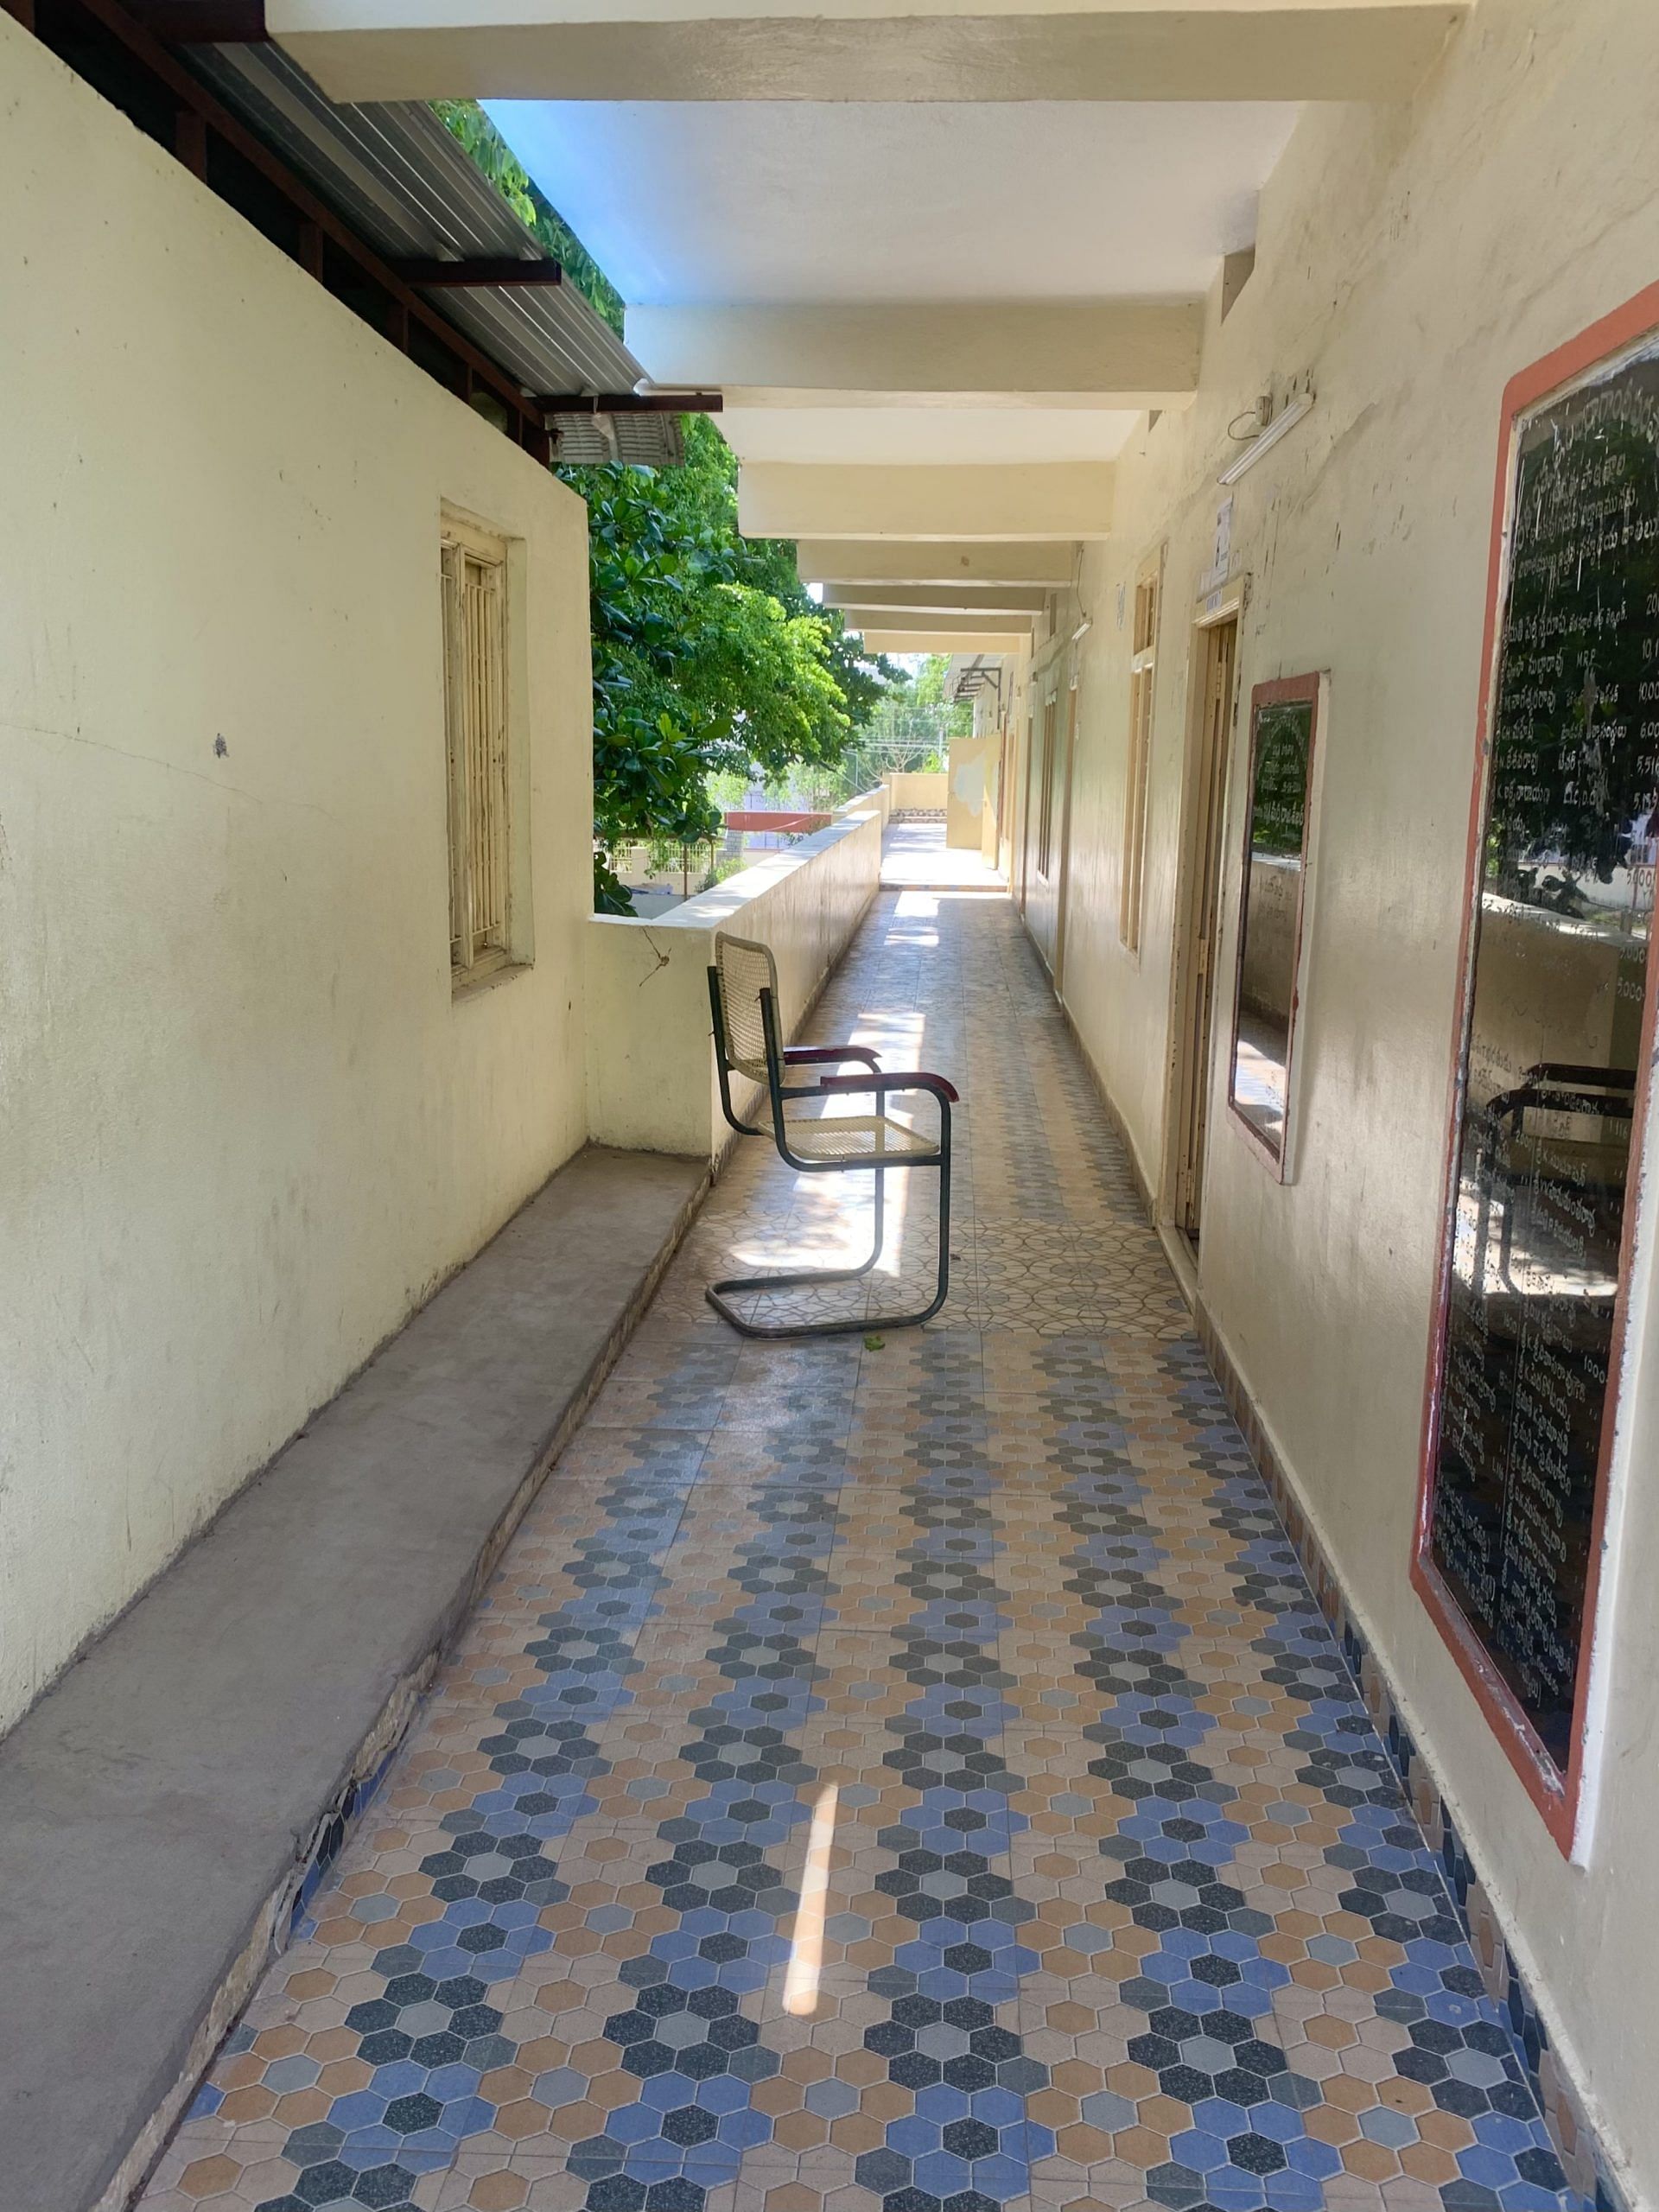  A corridor in BRIG High School | Antara Baruah, ThePrint